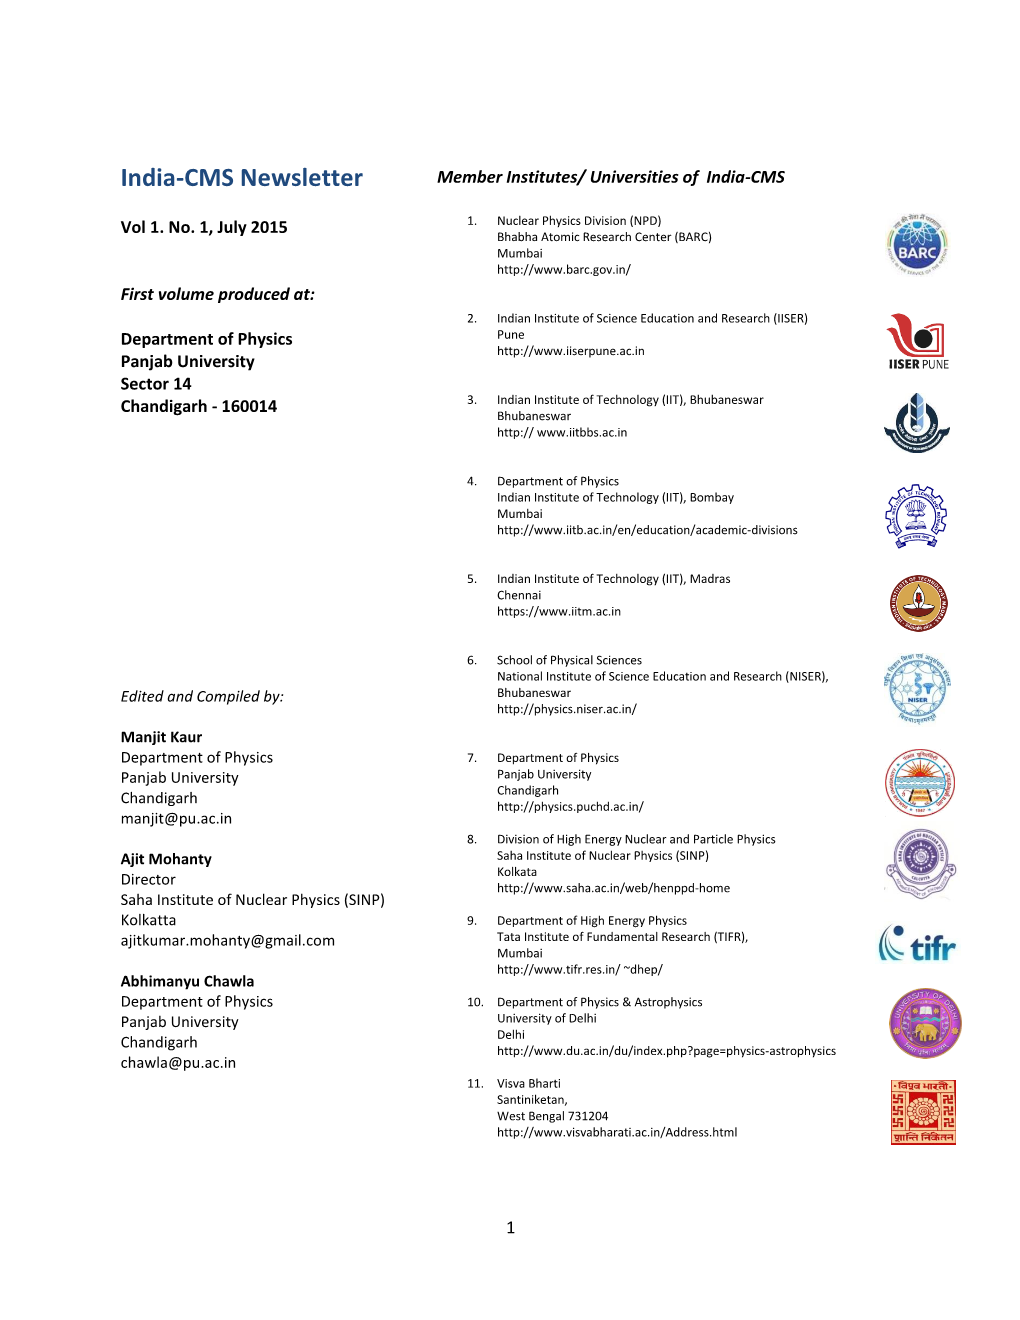 India-CMS Newsletter Member Institutes/ Universities of India-CMS